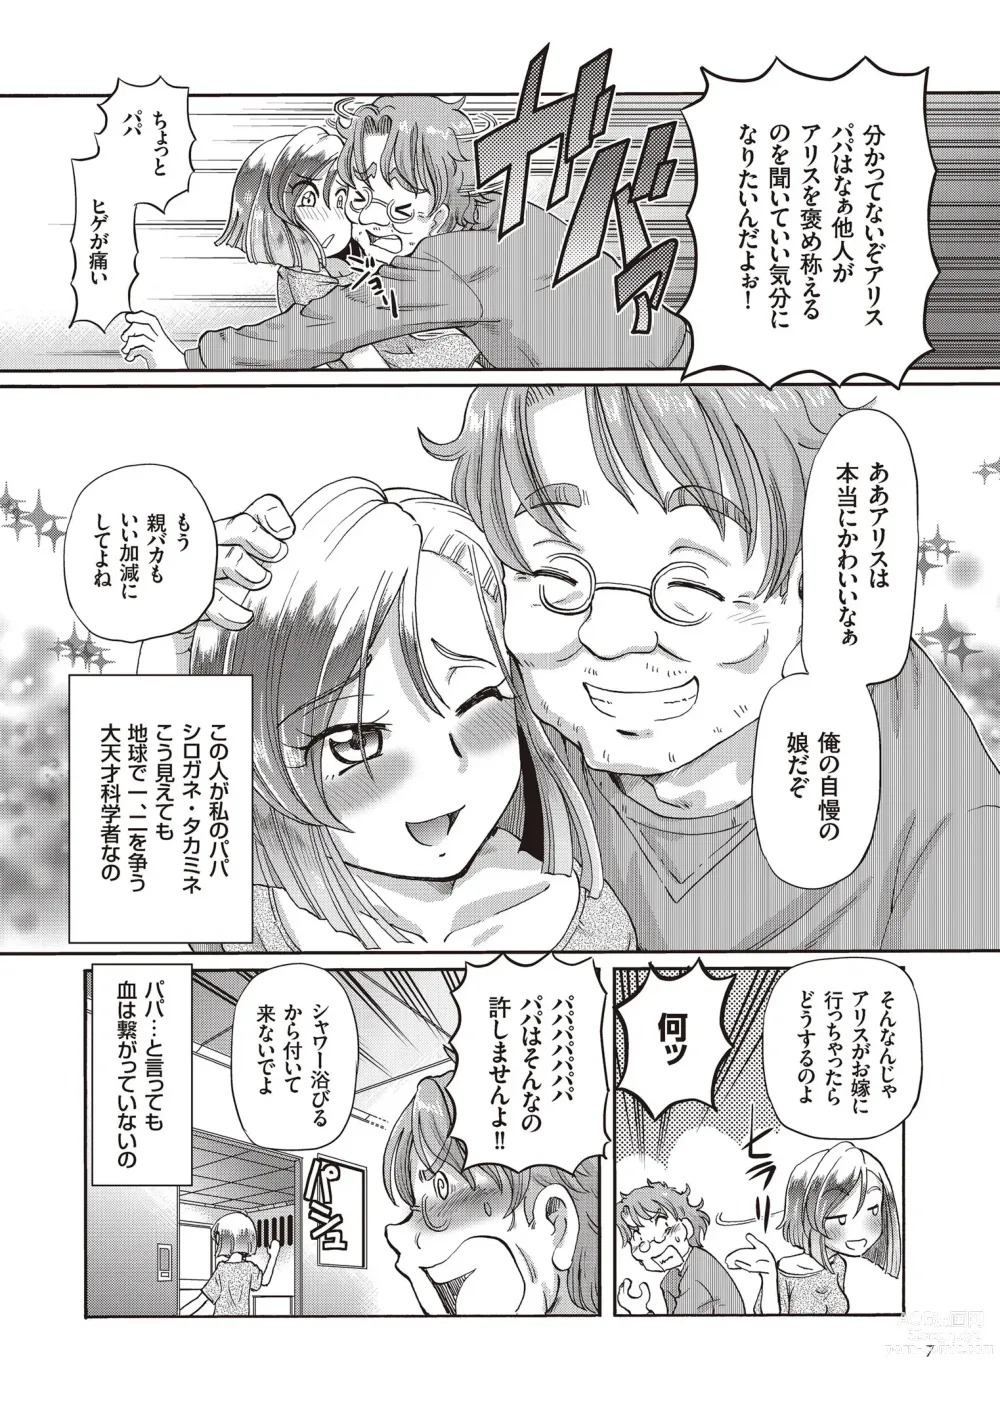 Page 7 of manga Shoujo Keiji Alice - Prisoner of the Parallel Space